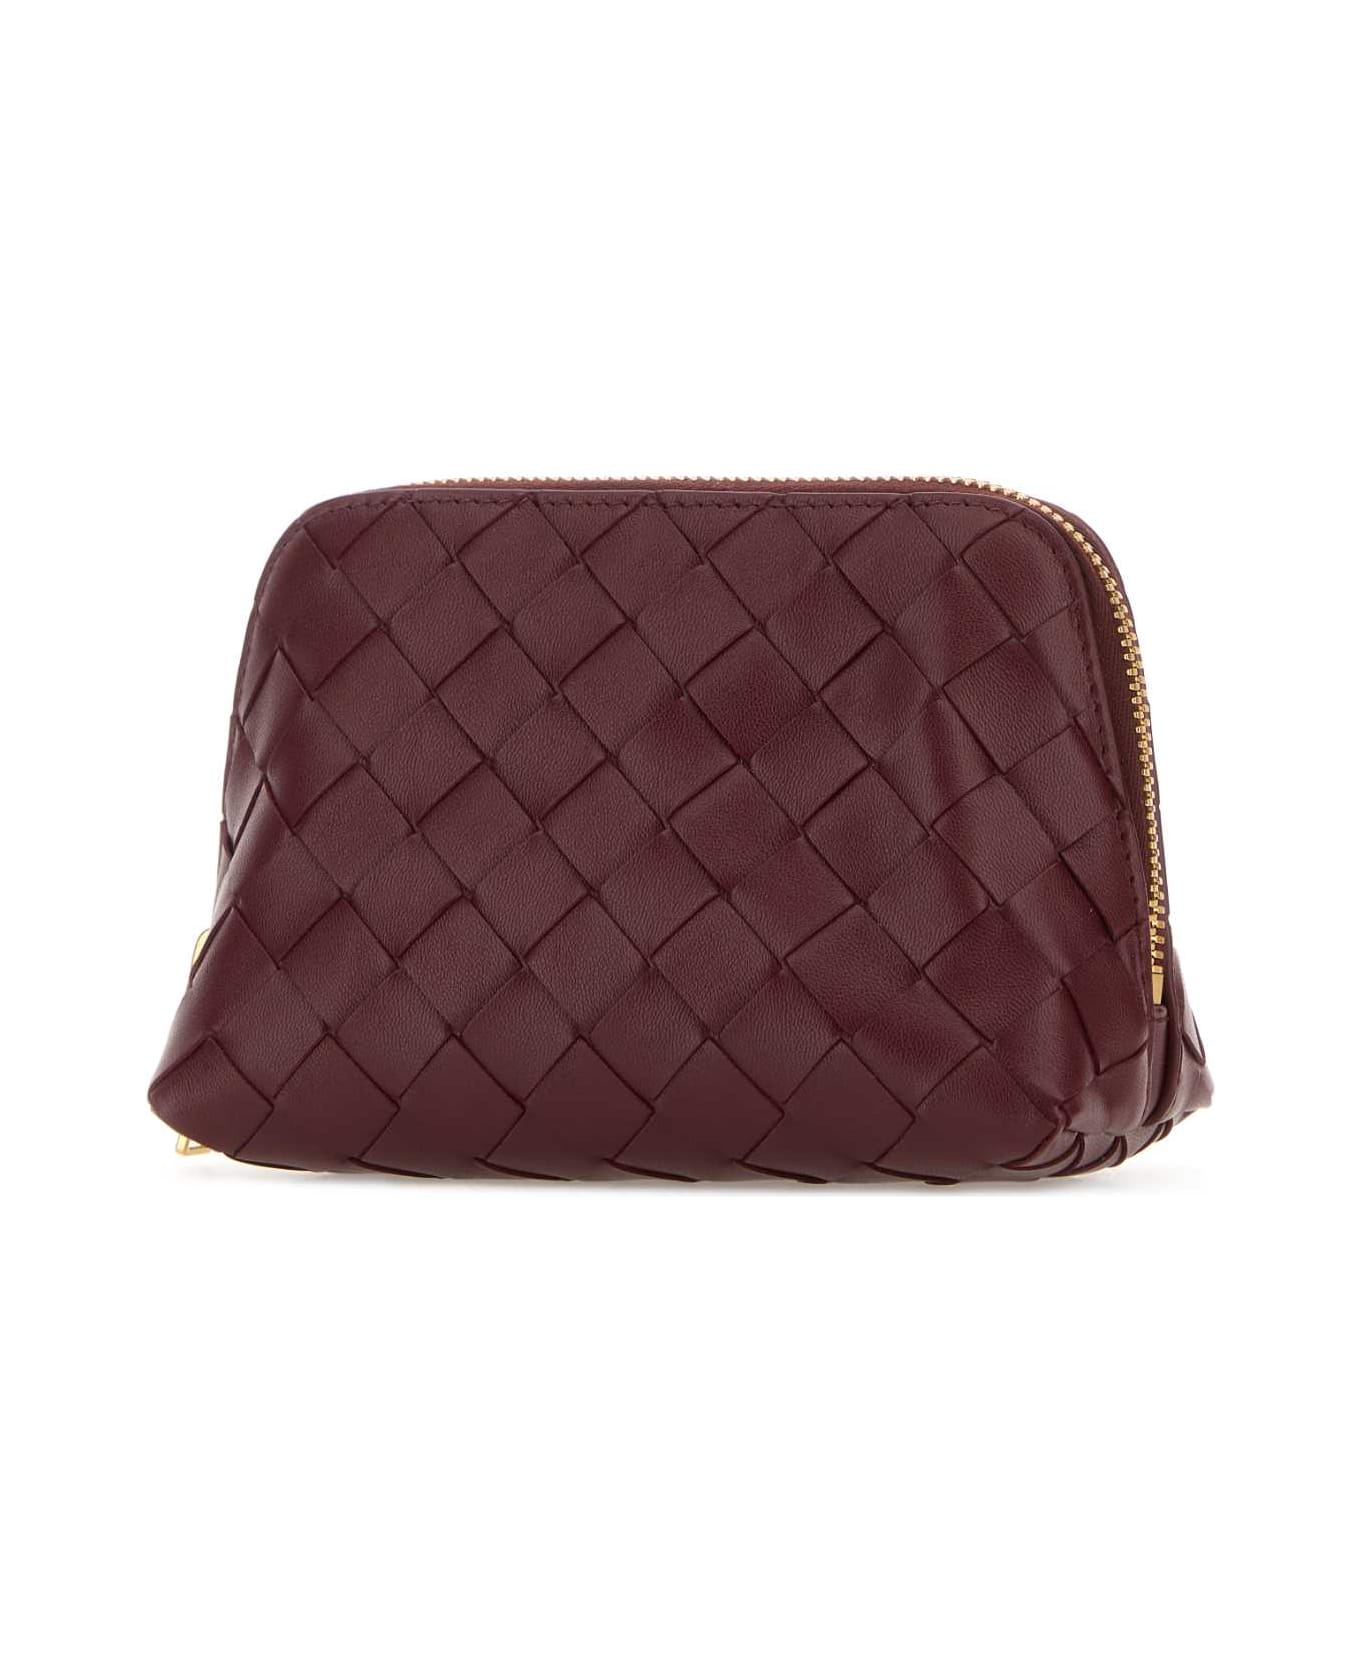 Bottega Veneta Burgundy Leather Beauty Case - BORDEAUX